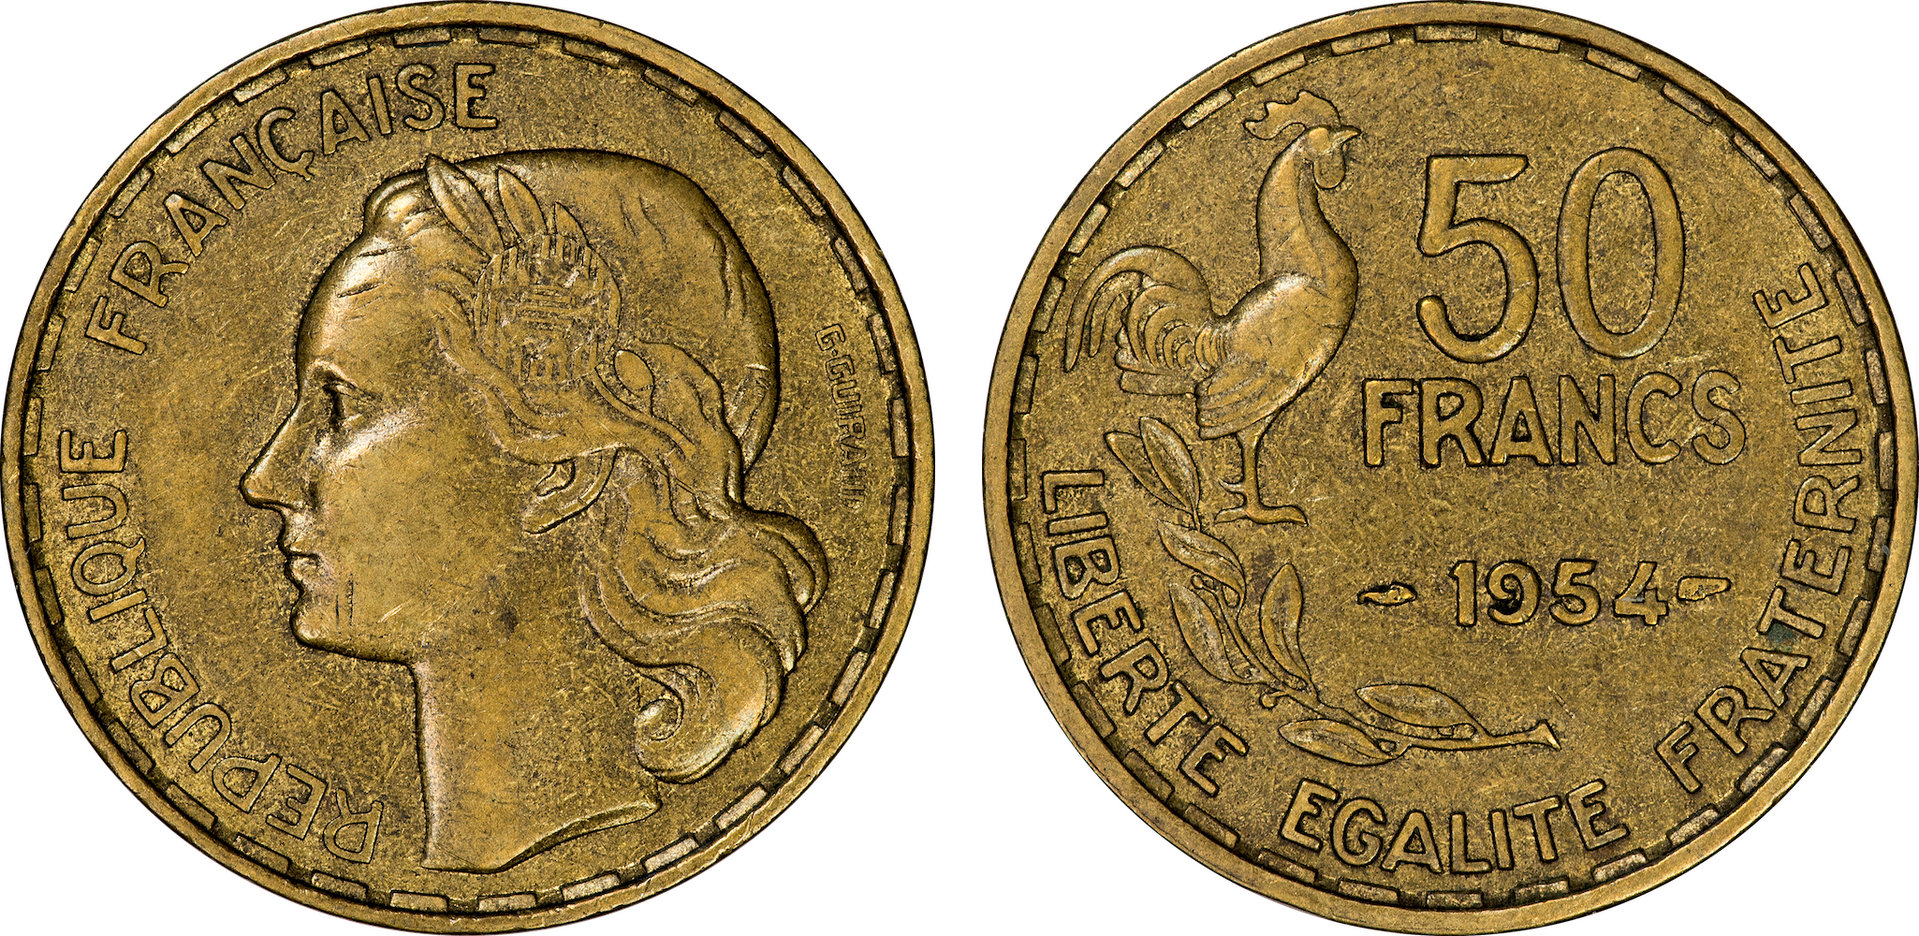 France - 1954 50 Francs.jpg